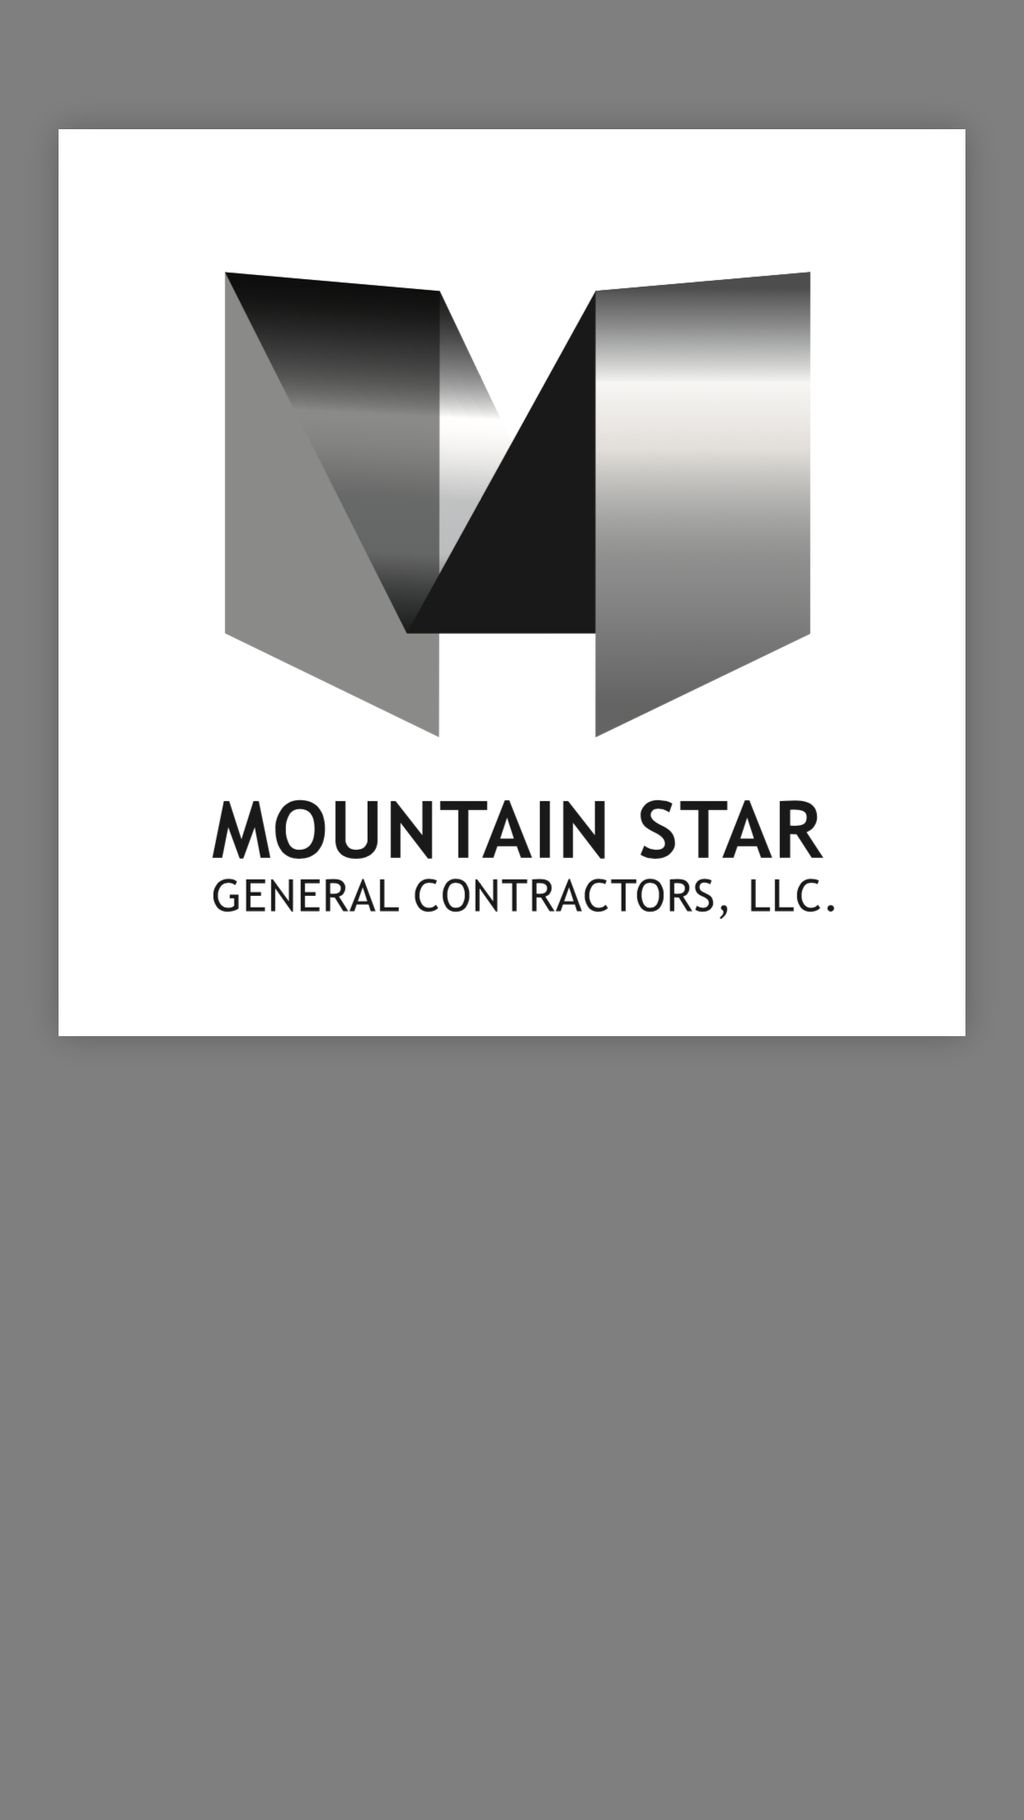 Mountain Star General Contractors, LLC